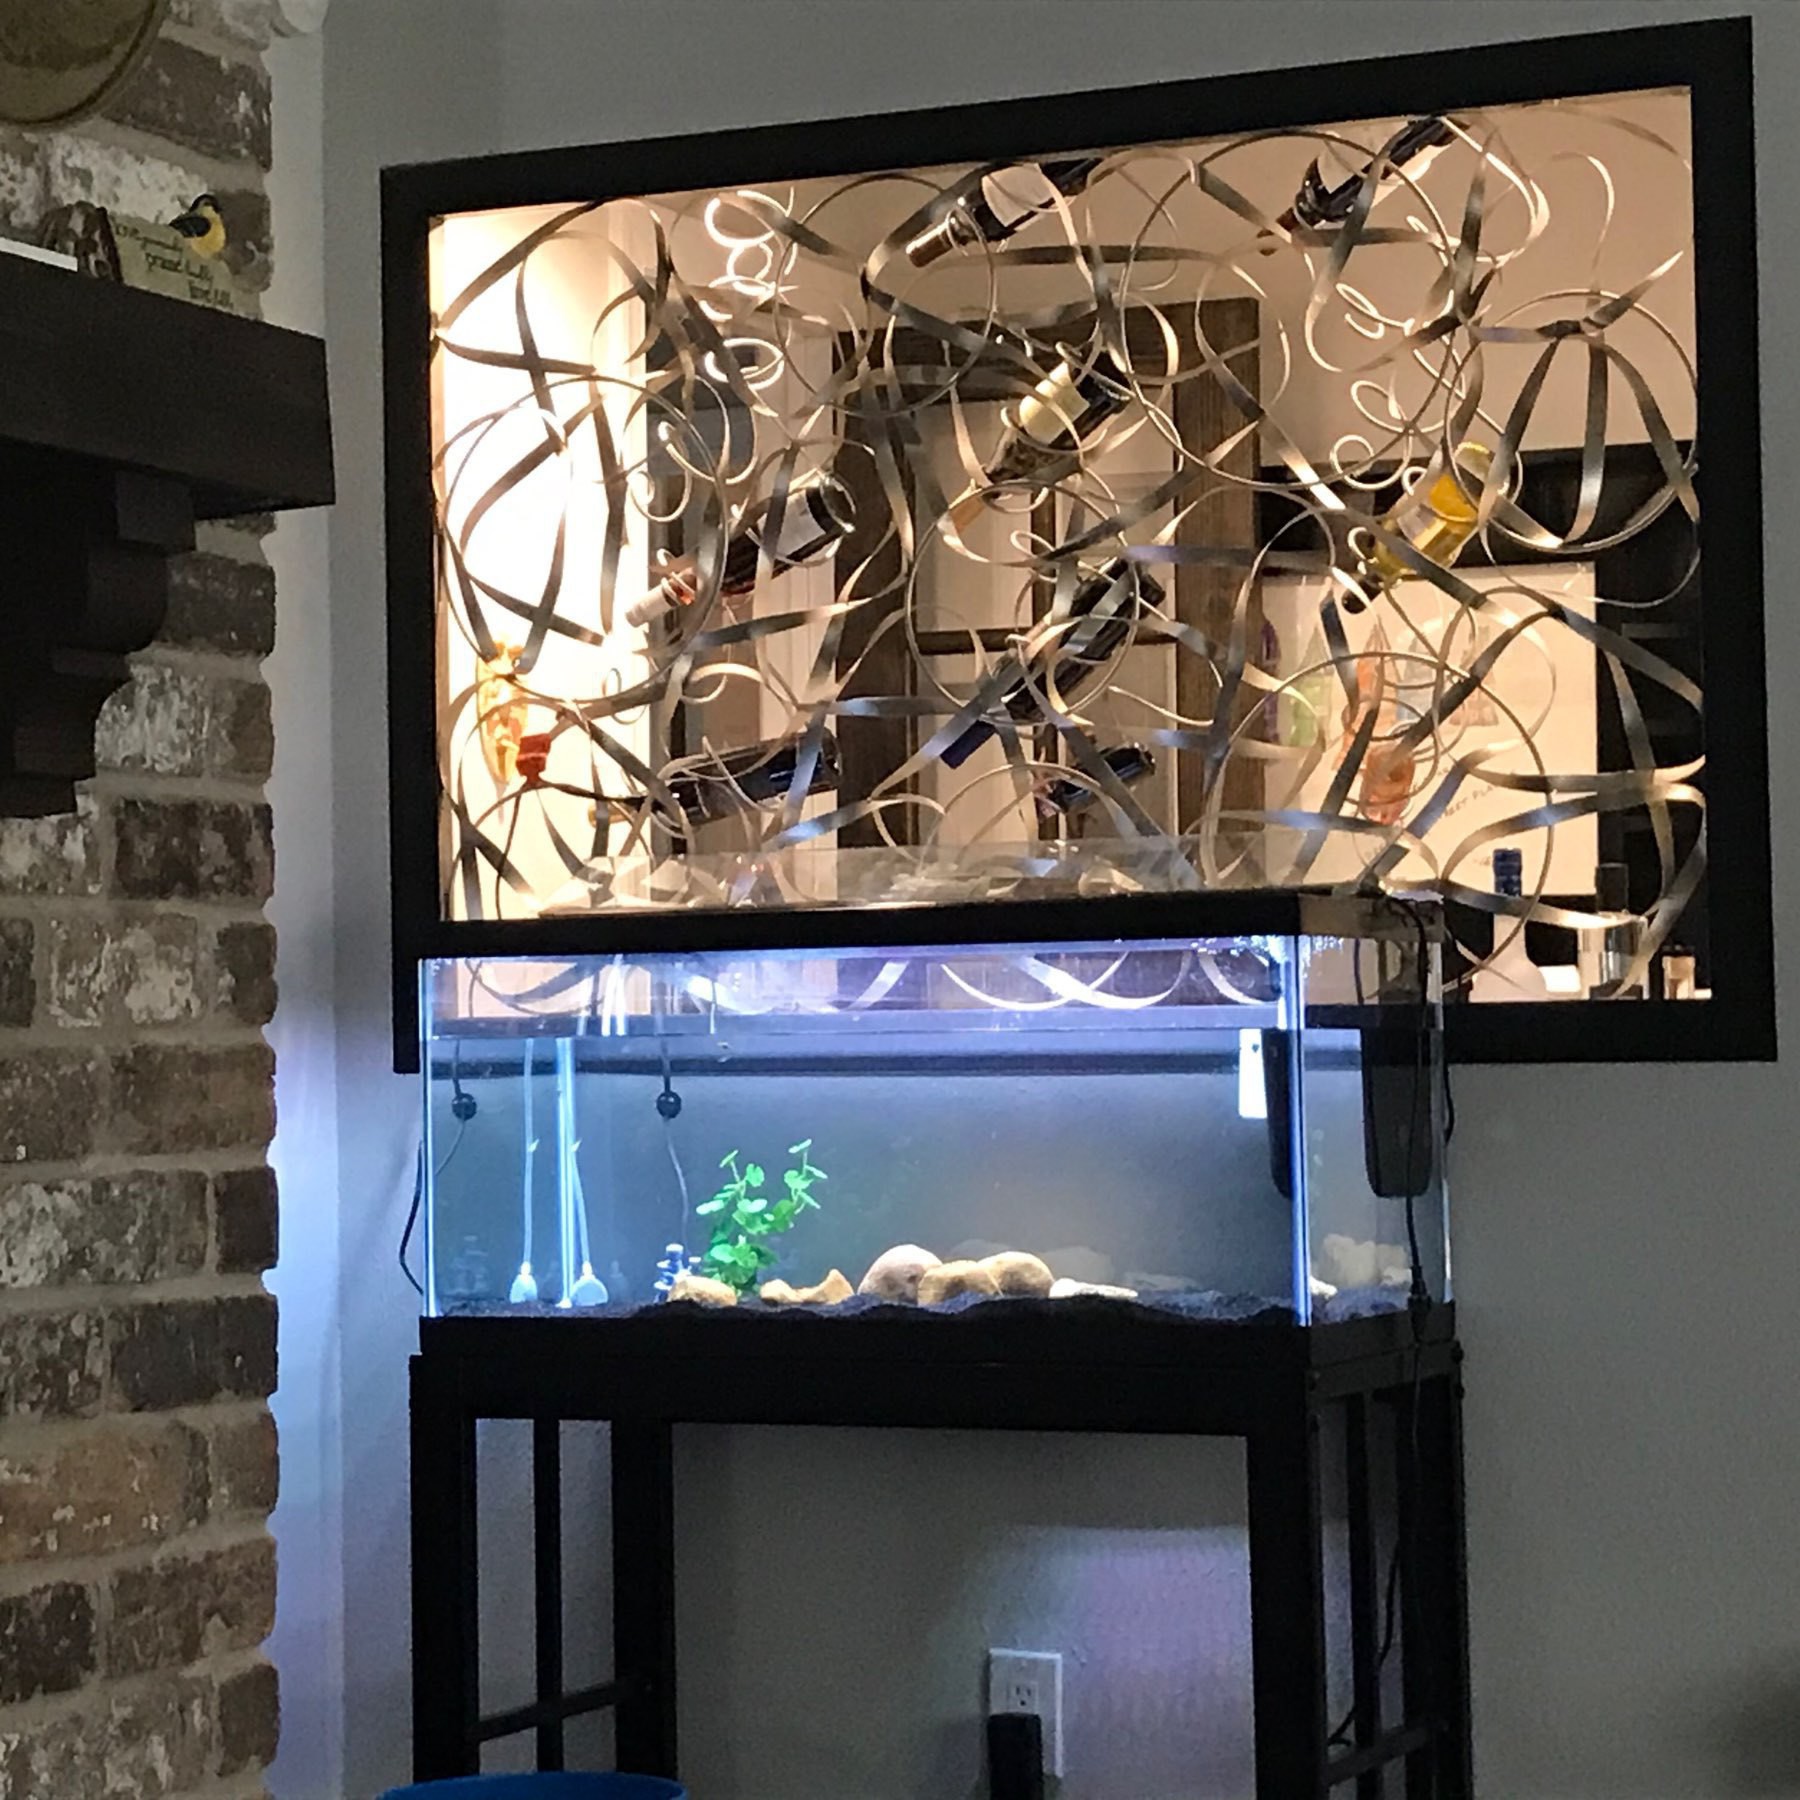 aquarium fish tank in front of a metal art piece